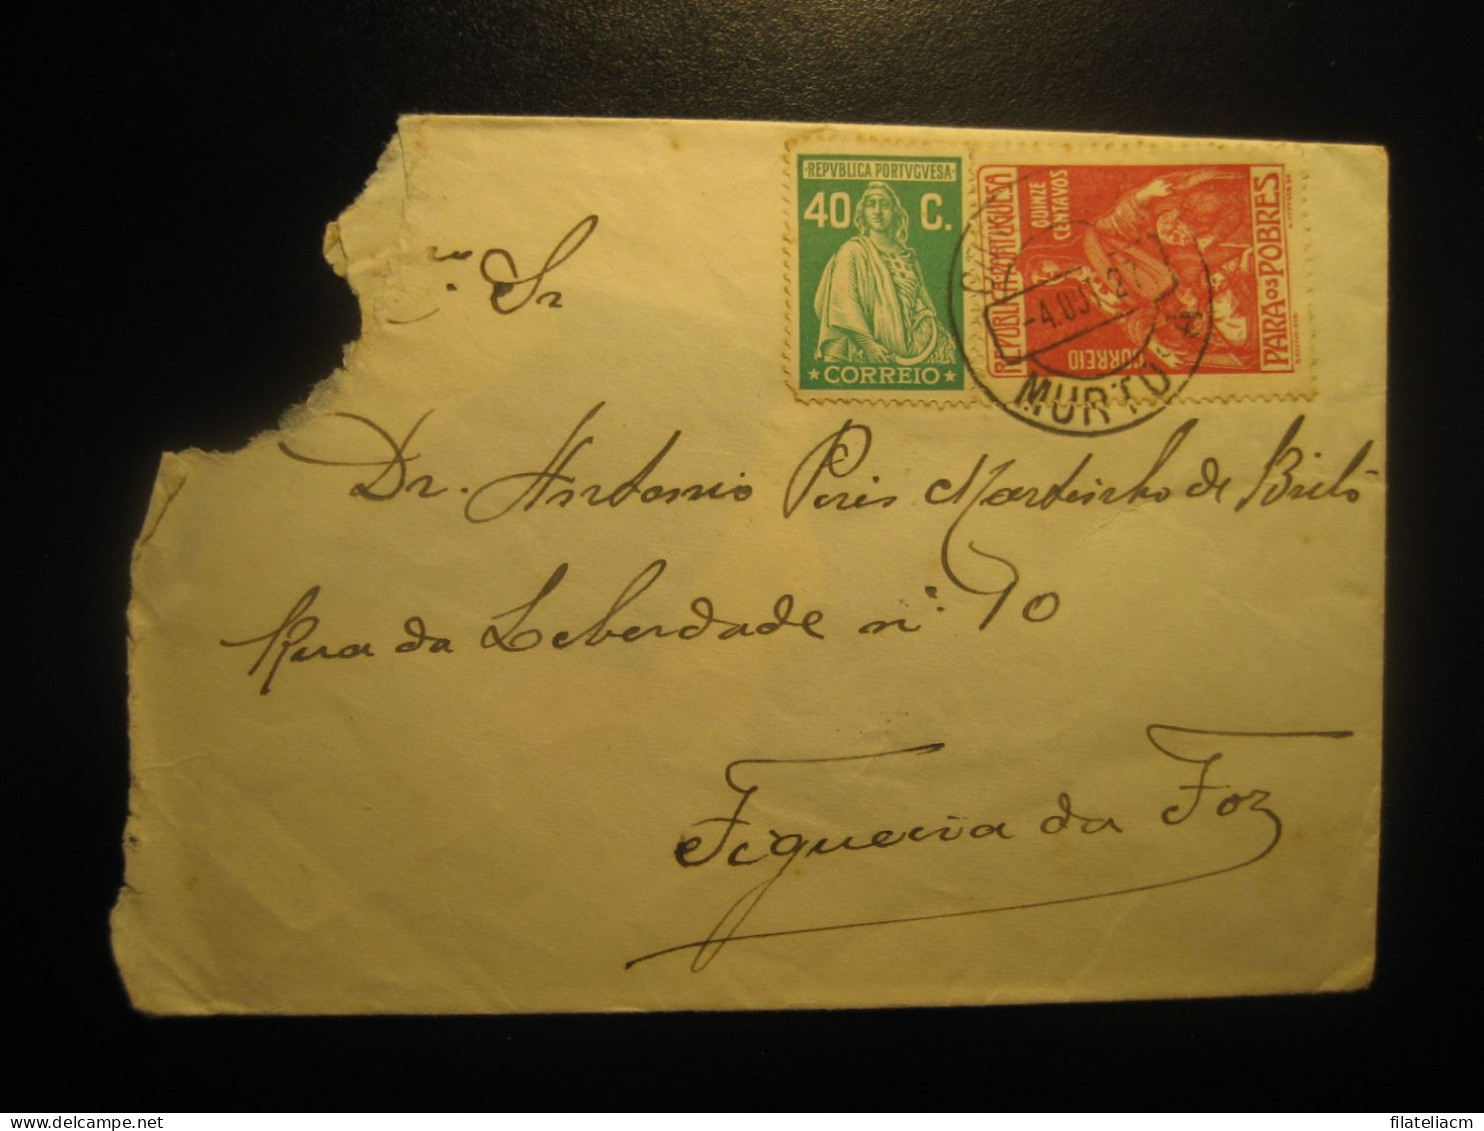 MURTOSA 1927 To Figueira Da Foz + Para Os Pobres Stamp Cancel Damaged Cover PORTUGAL - Lettres & Documents